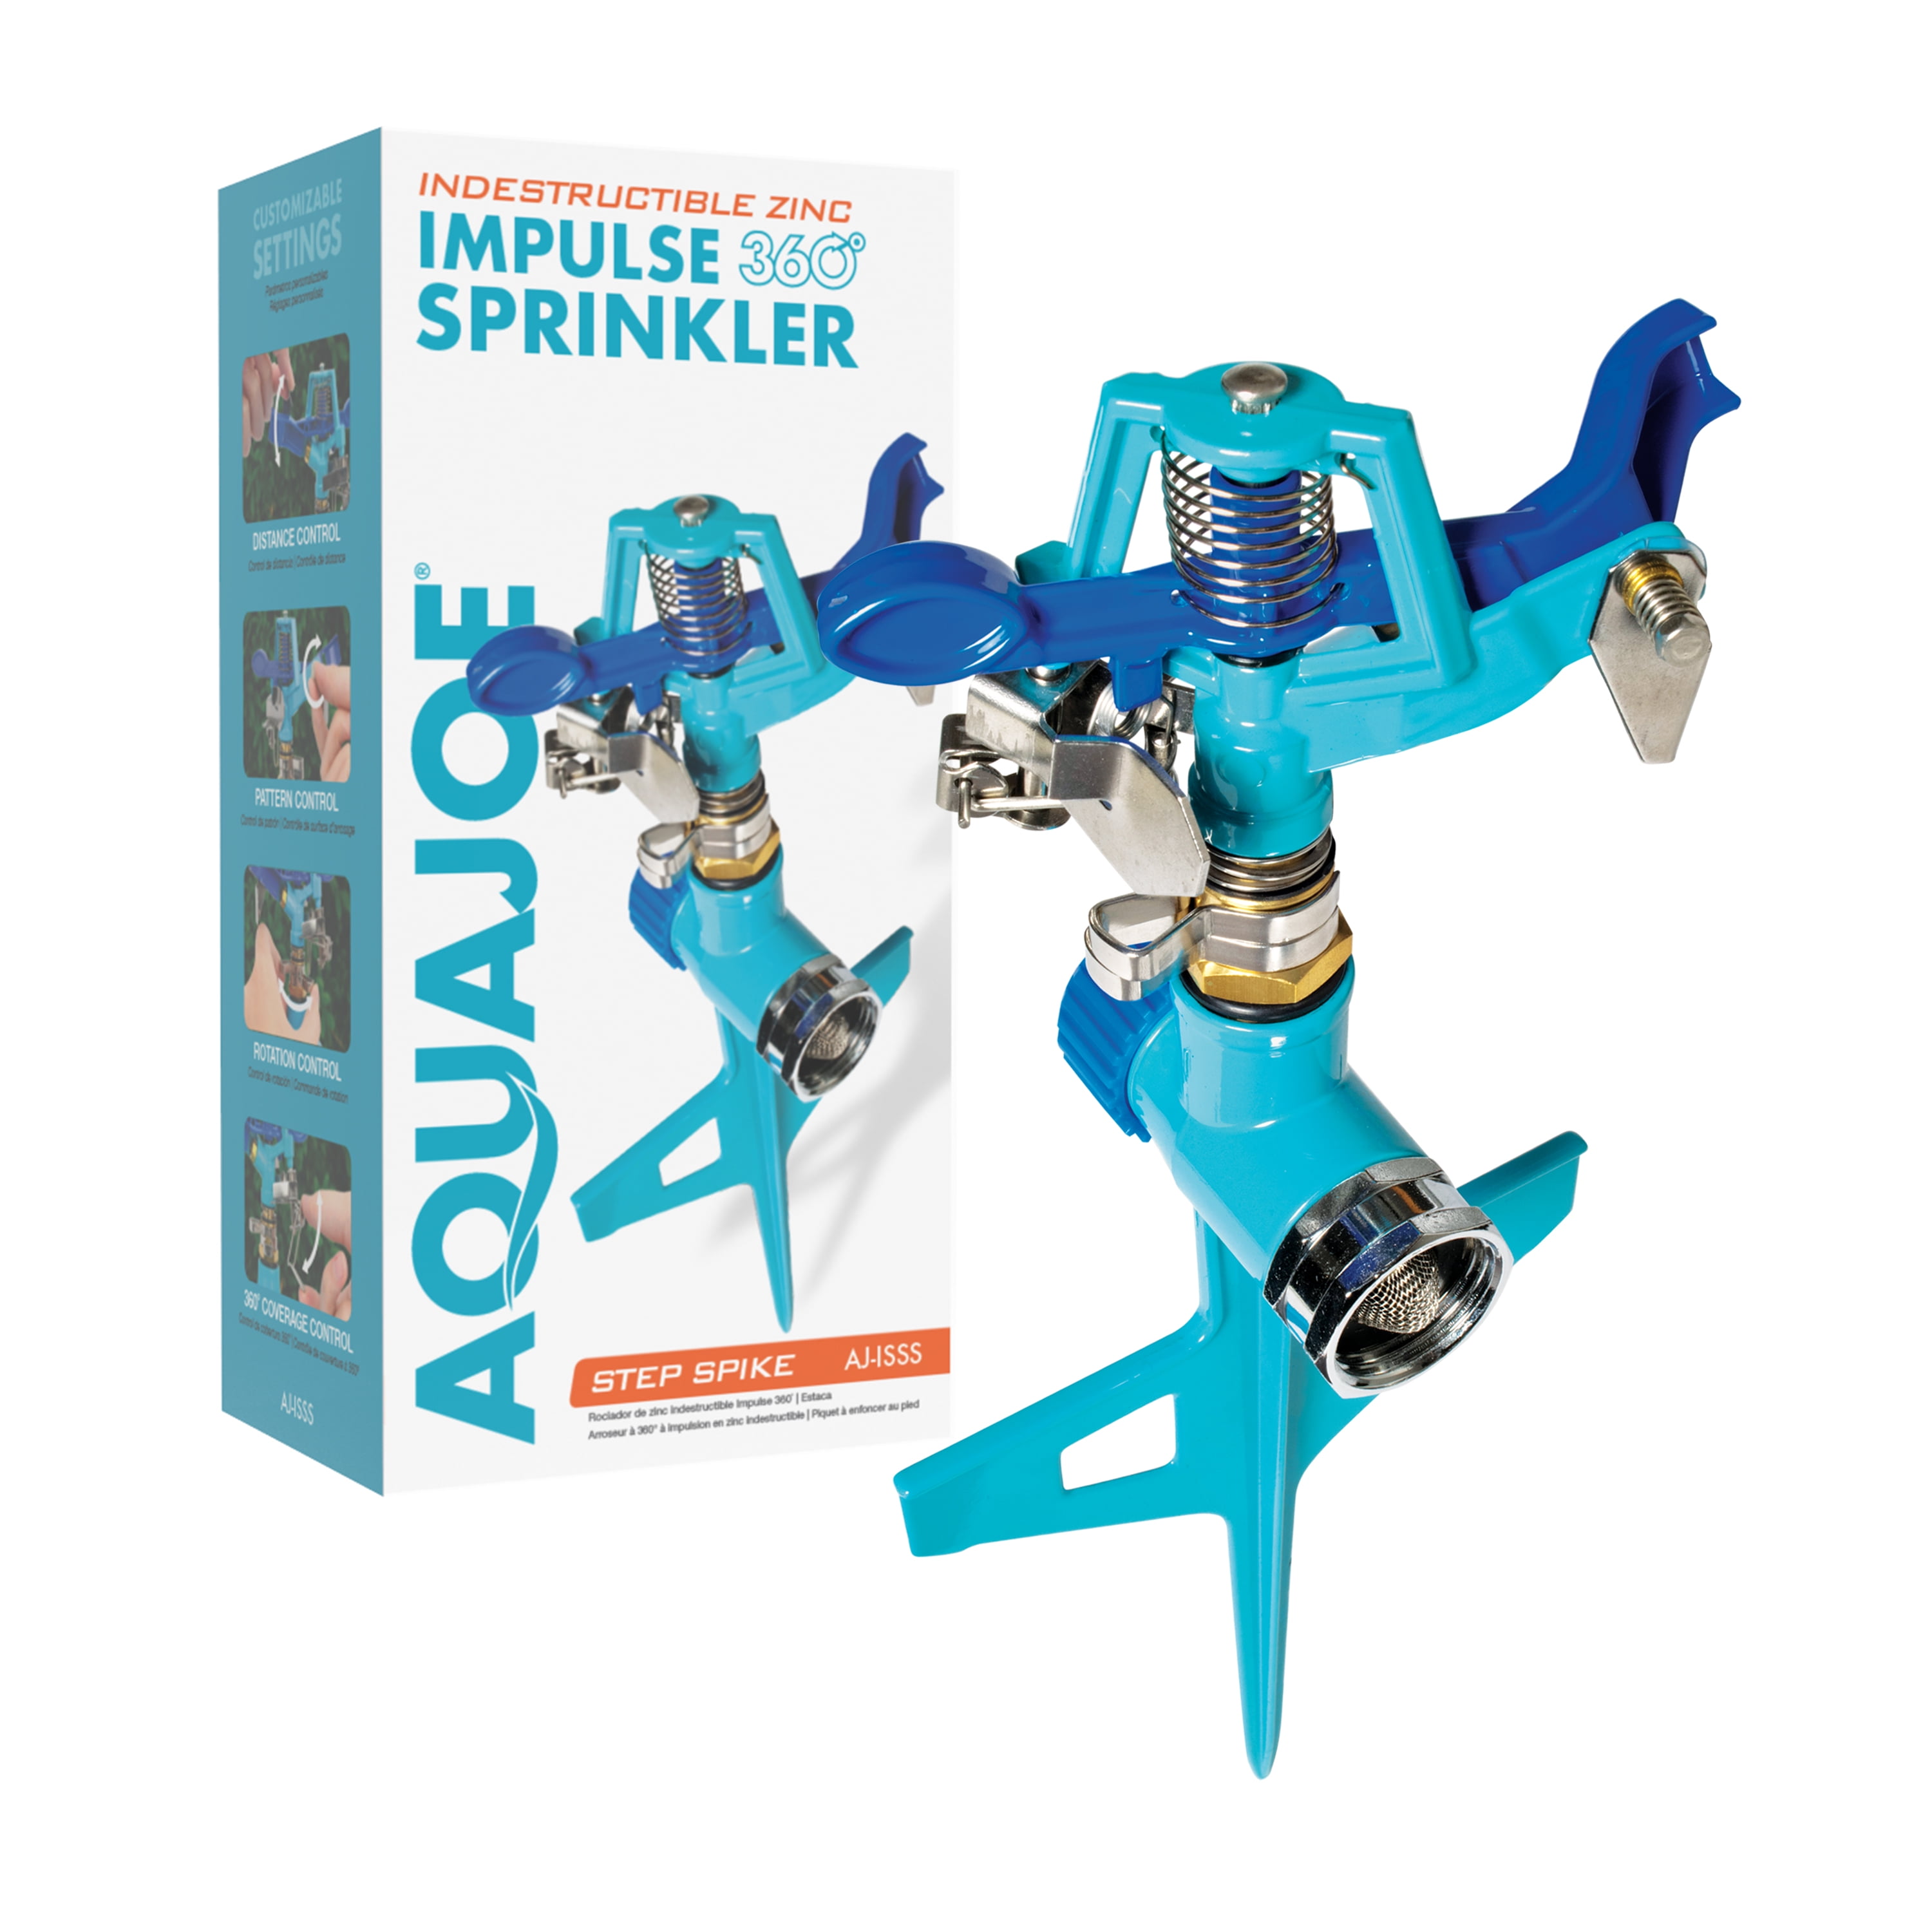 Aqua Joe Indestructible Impulse 360º Sprinkler, Customizable Coverage, 1,390 Sq. ft. Max Coverage